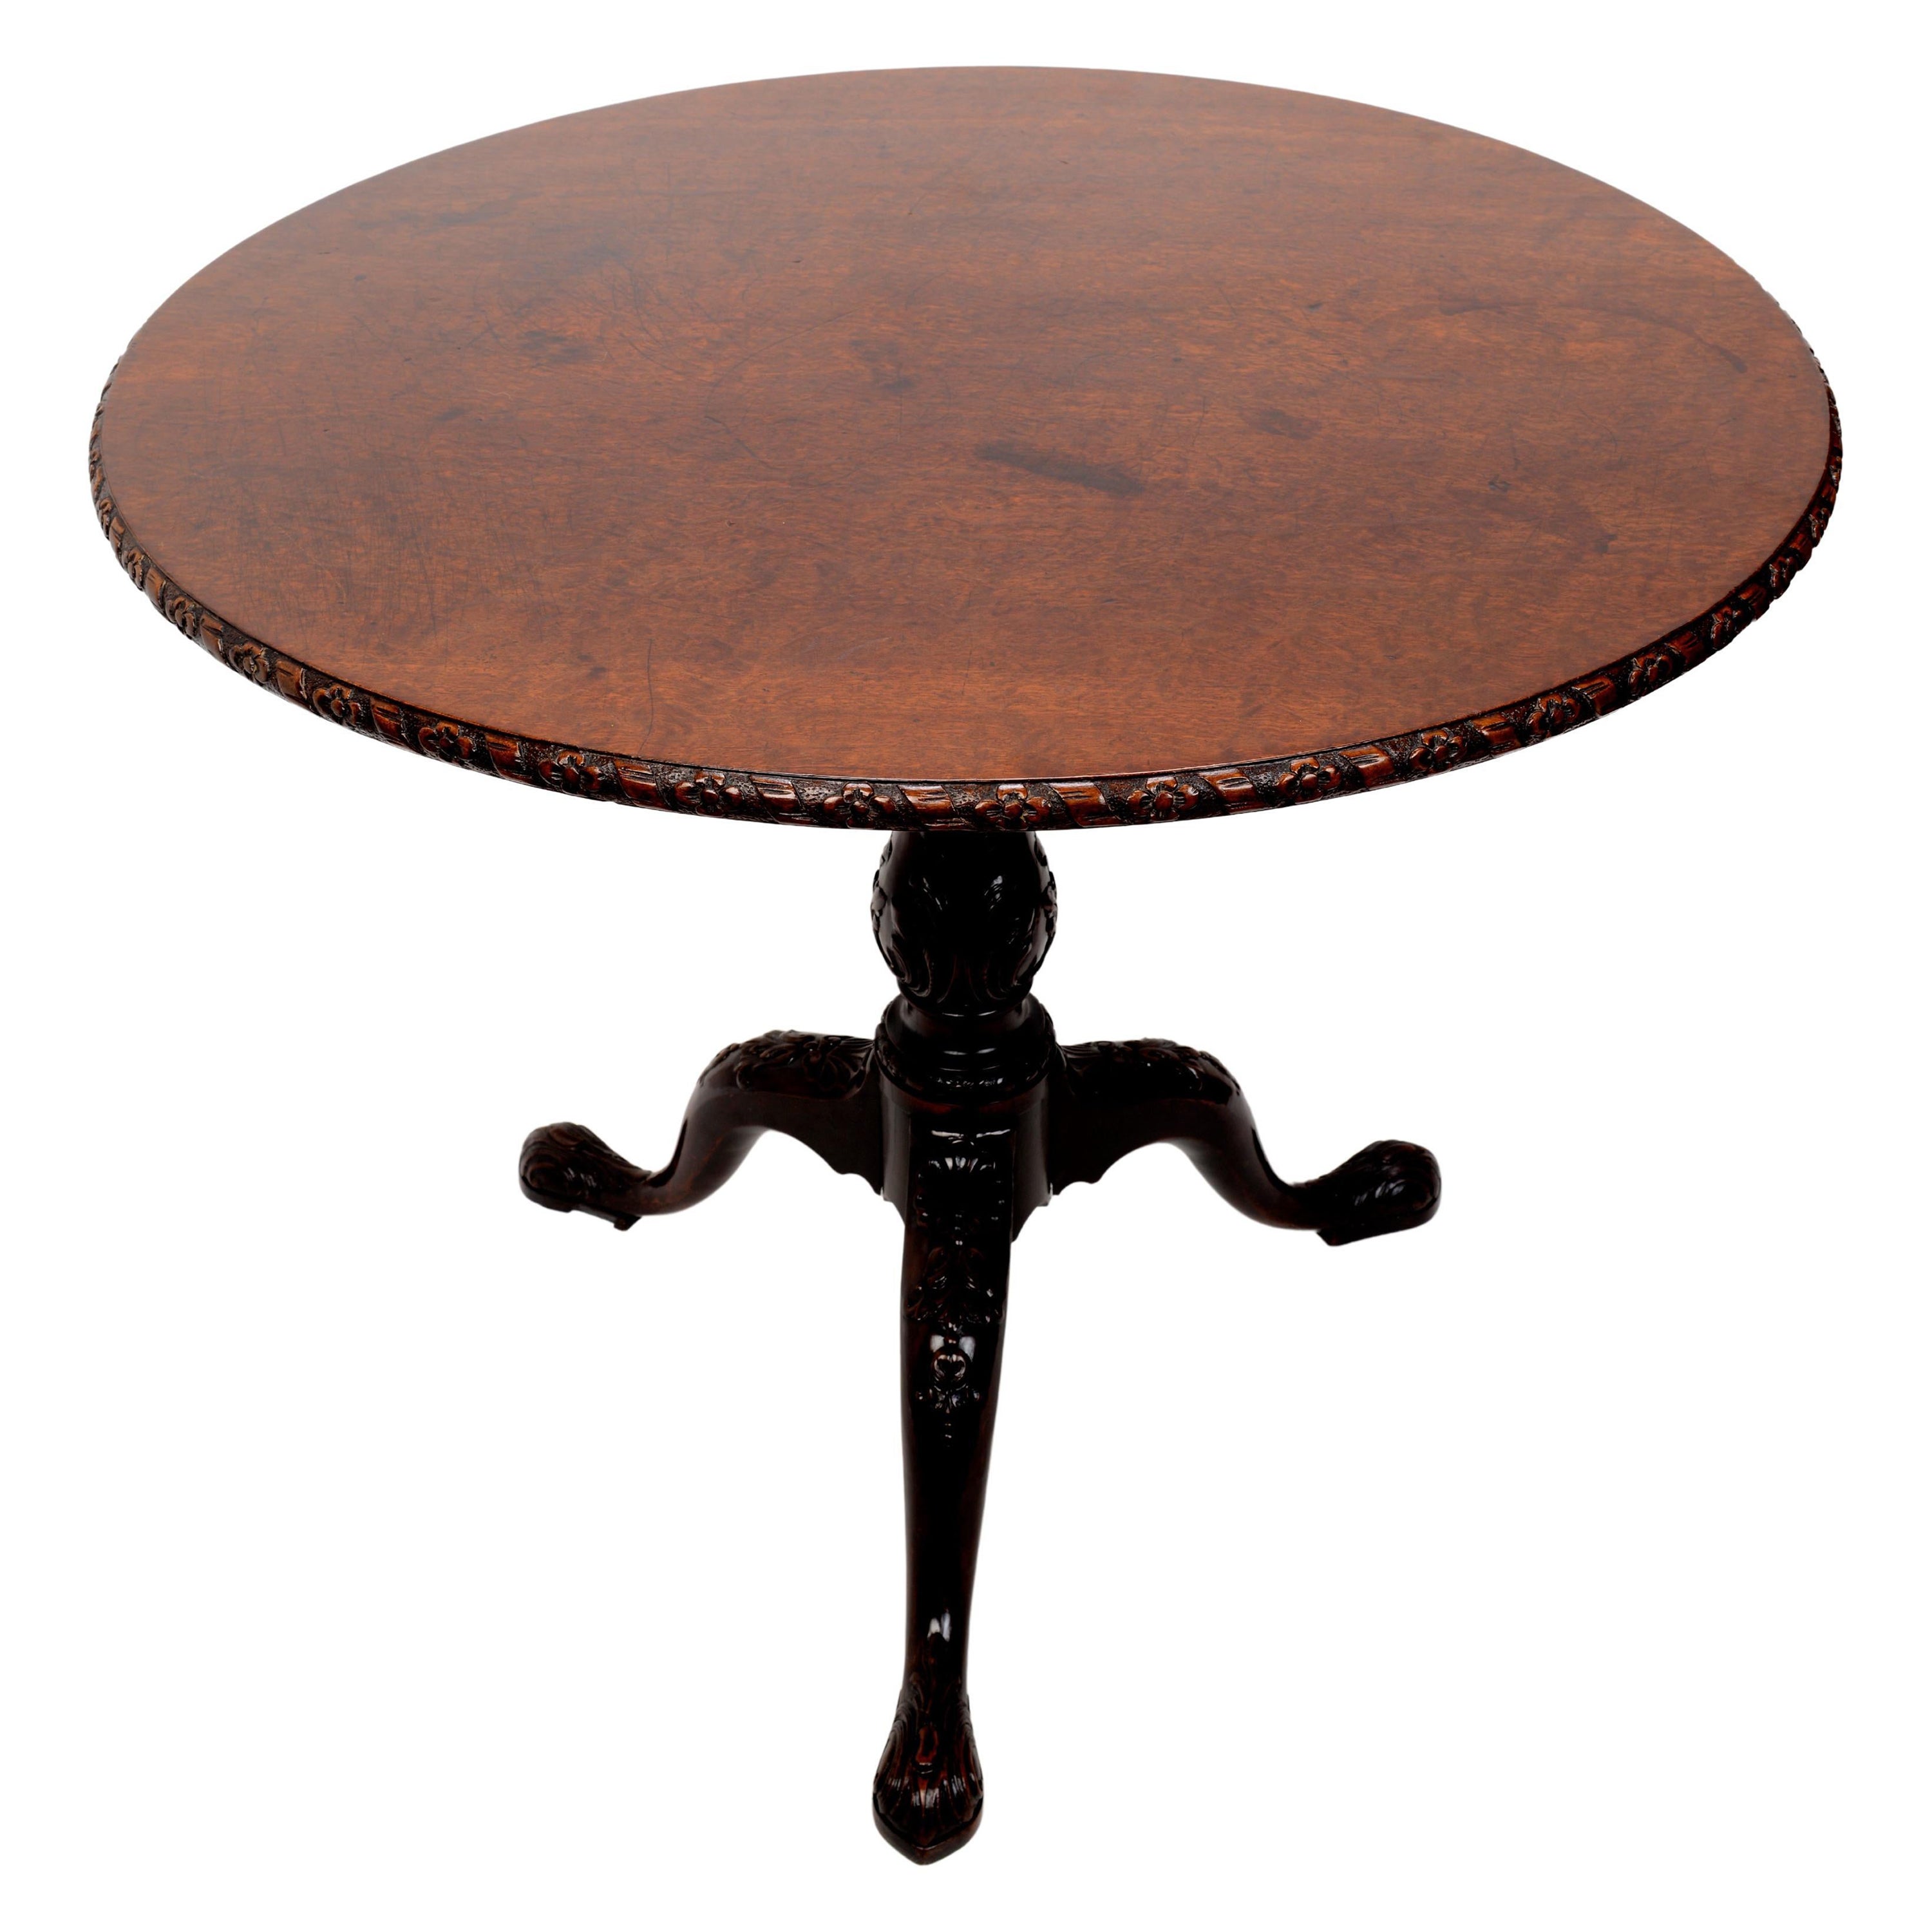 Irish Geo II Plum Pudding Mahogany Tilt and Turn Tripod Tea Table, c1750 For Sale